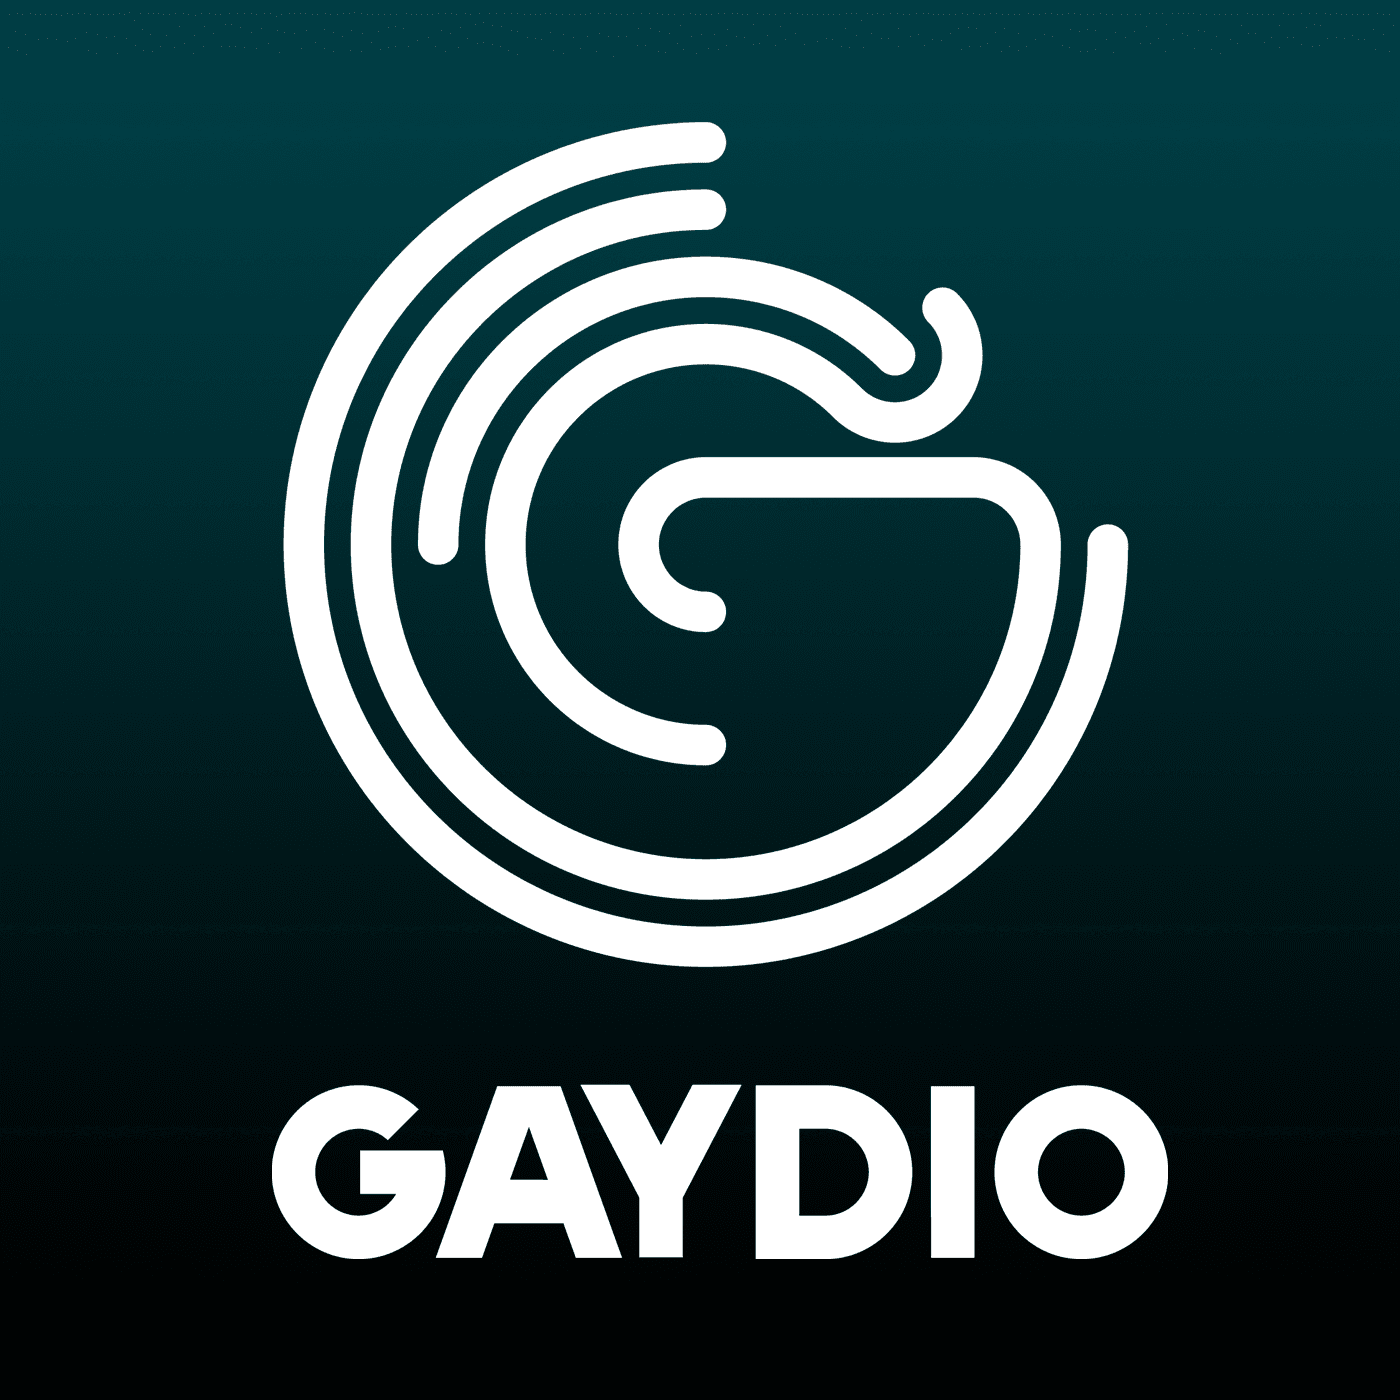 Gaydio